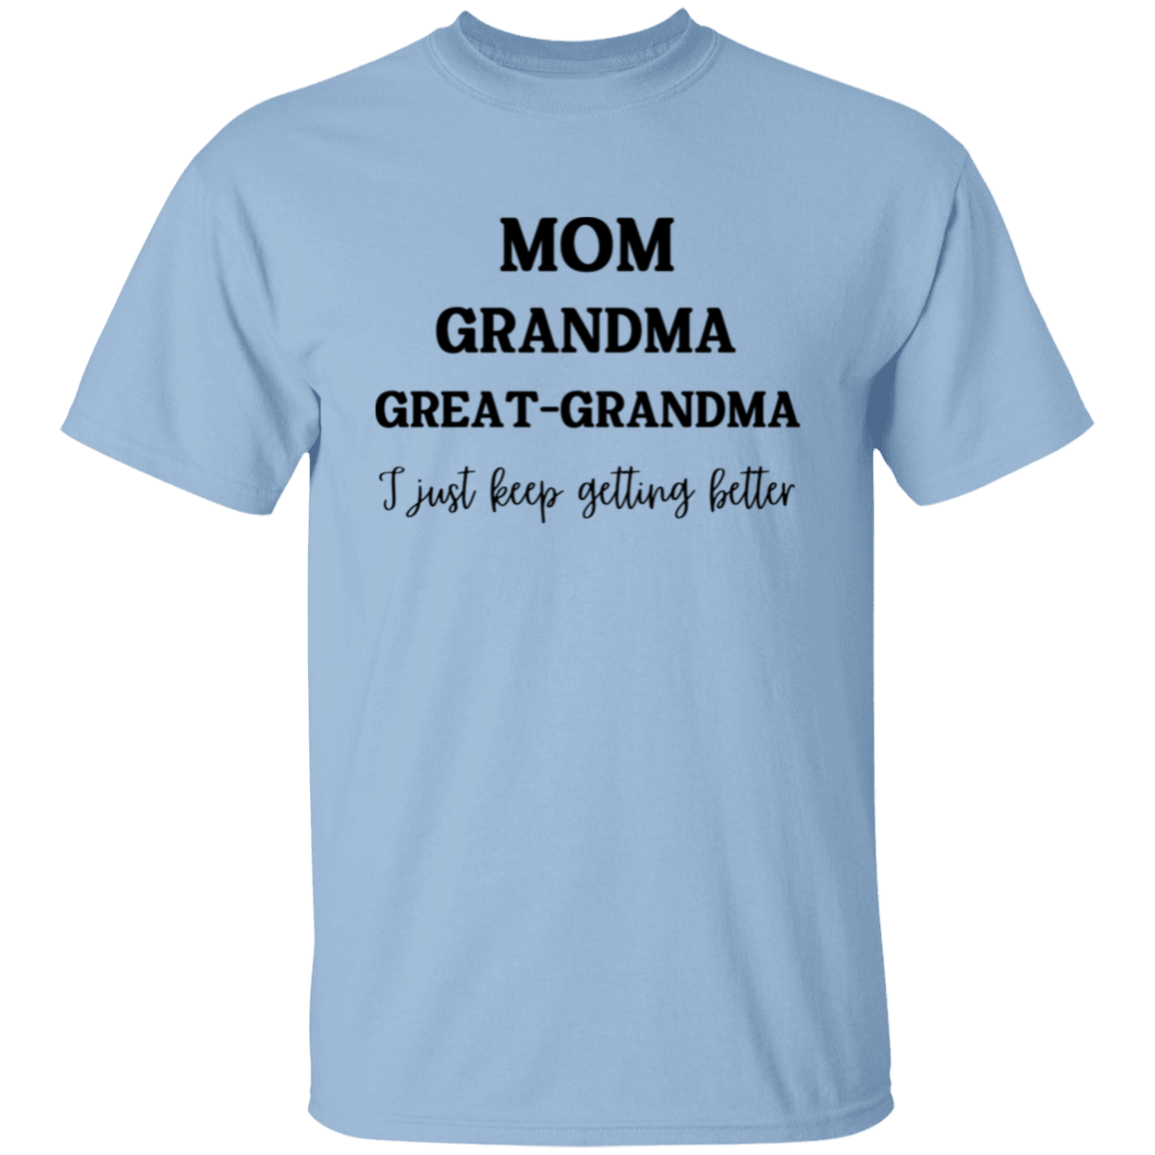 Mom. Grandma, Great- Grandma T-Shirt